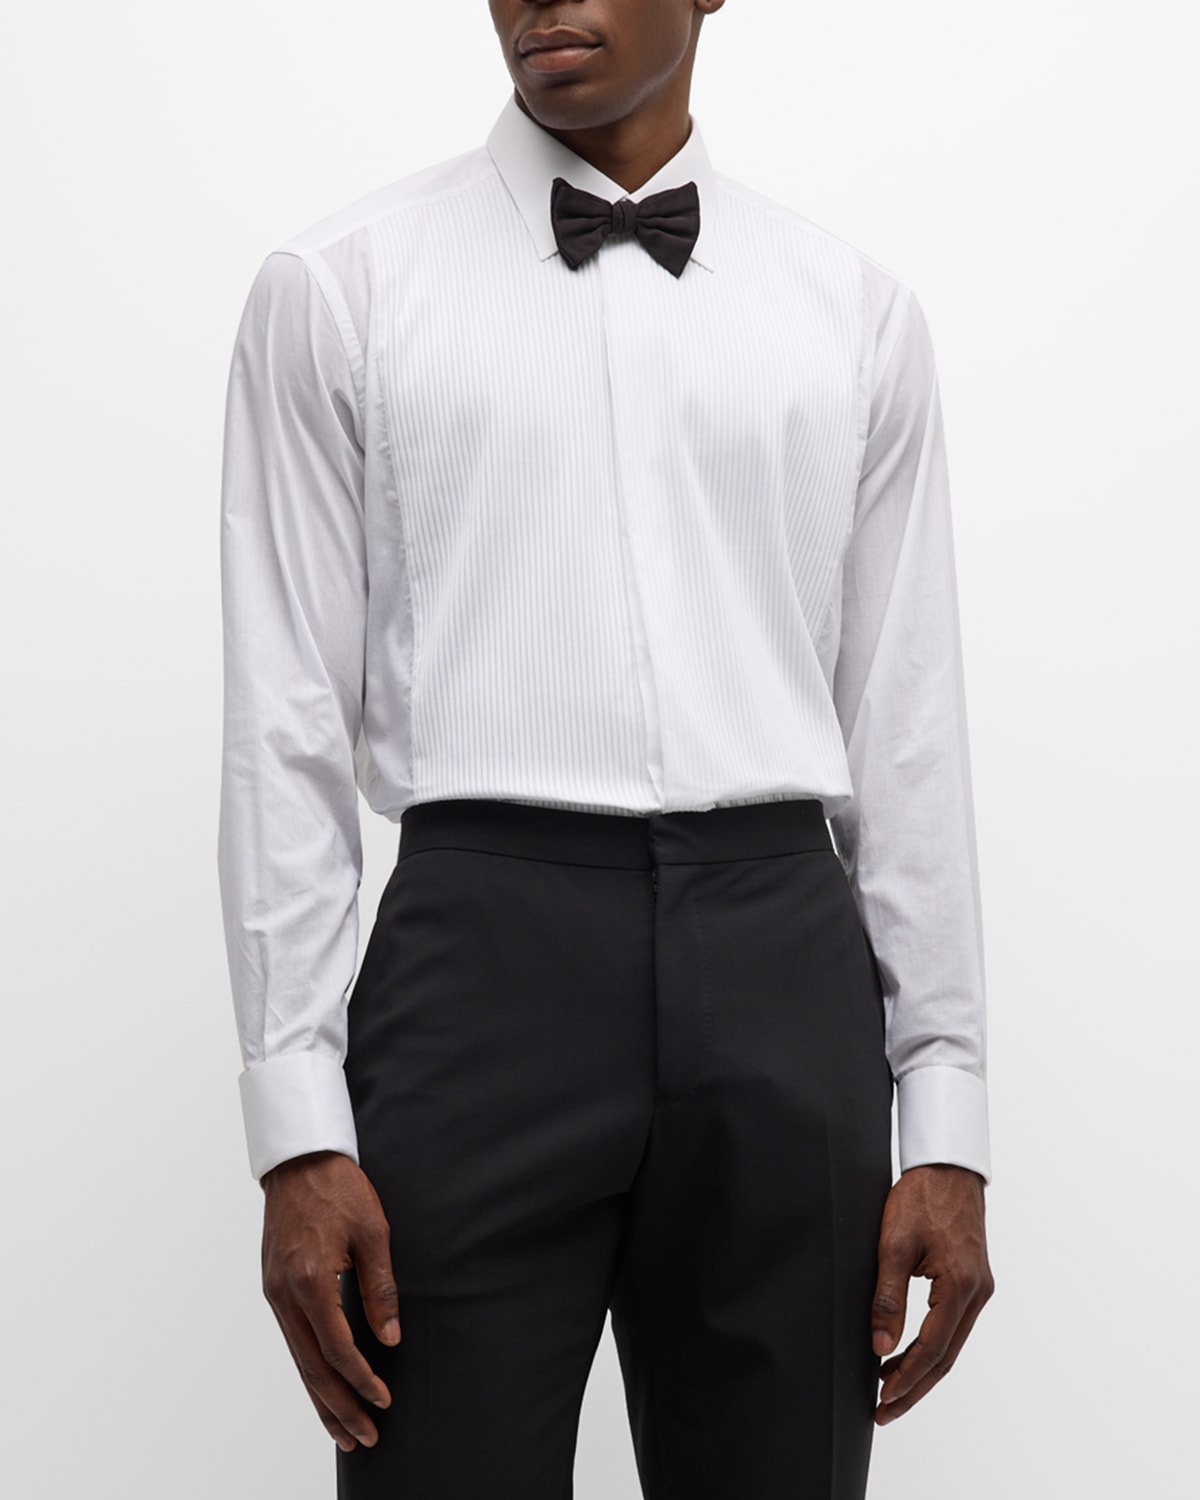 French Cuff Dress Shirt | Neiman Marcus